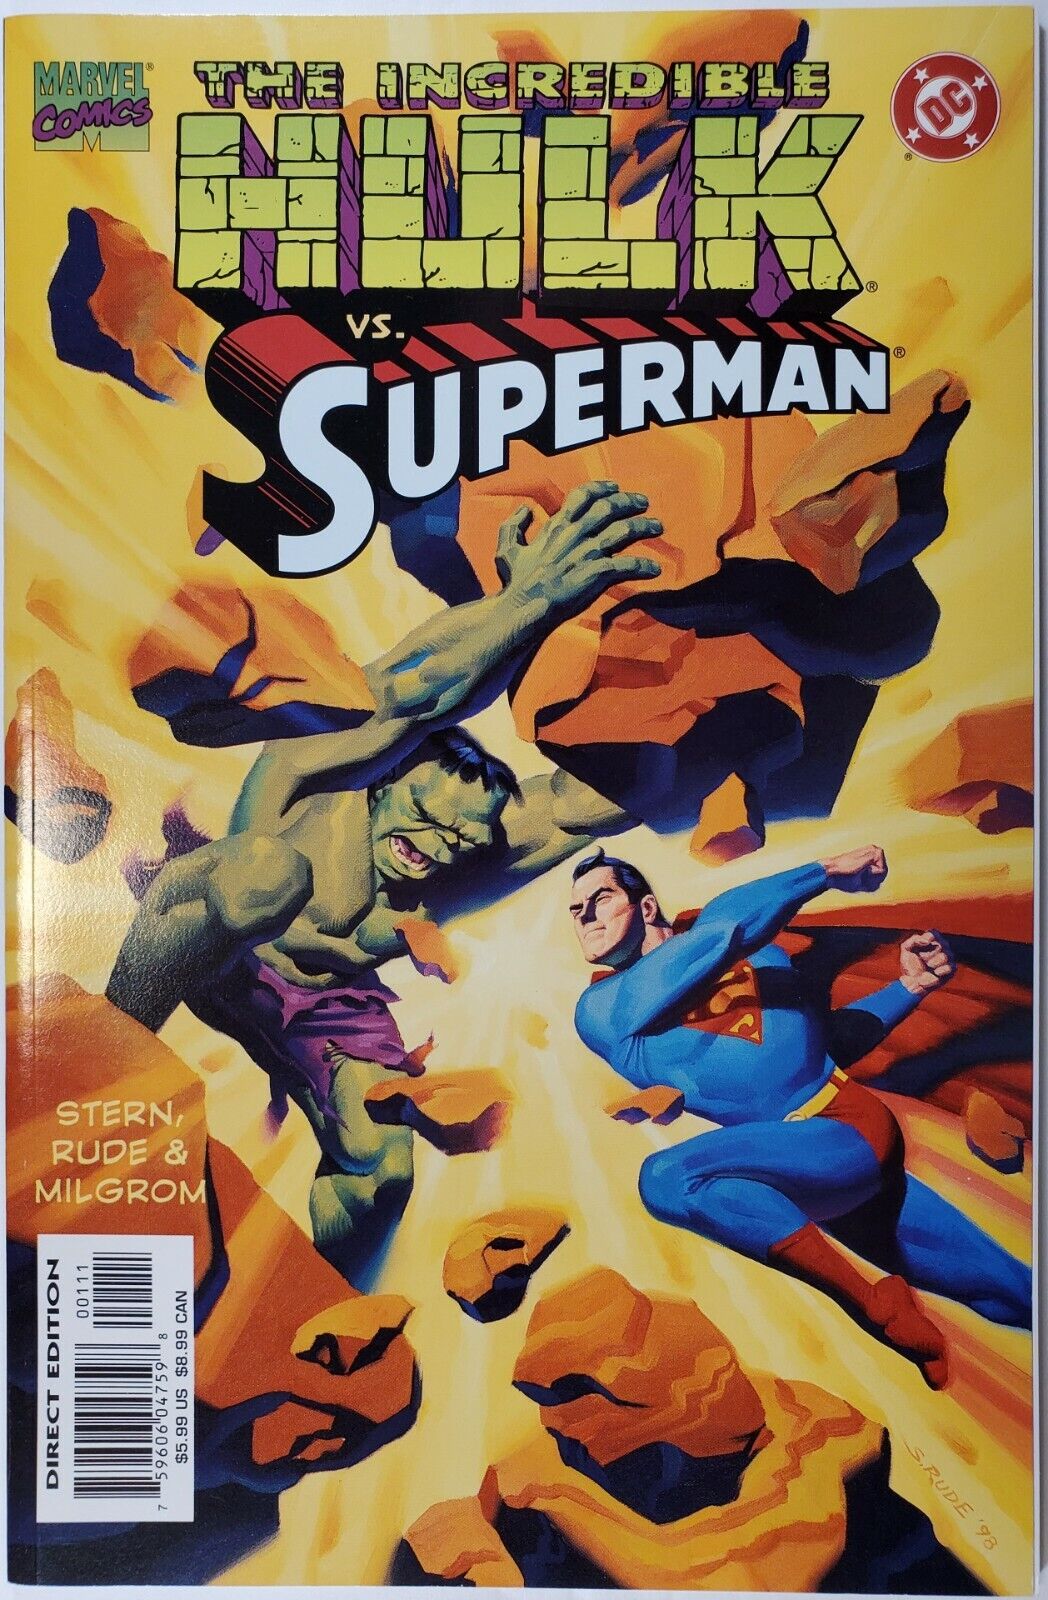 THE INCREDIBLE HULK VS. SUPERMAN